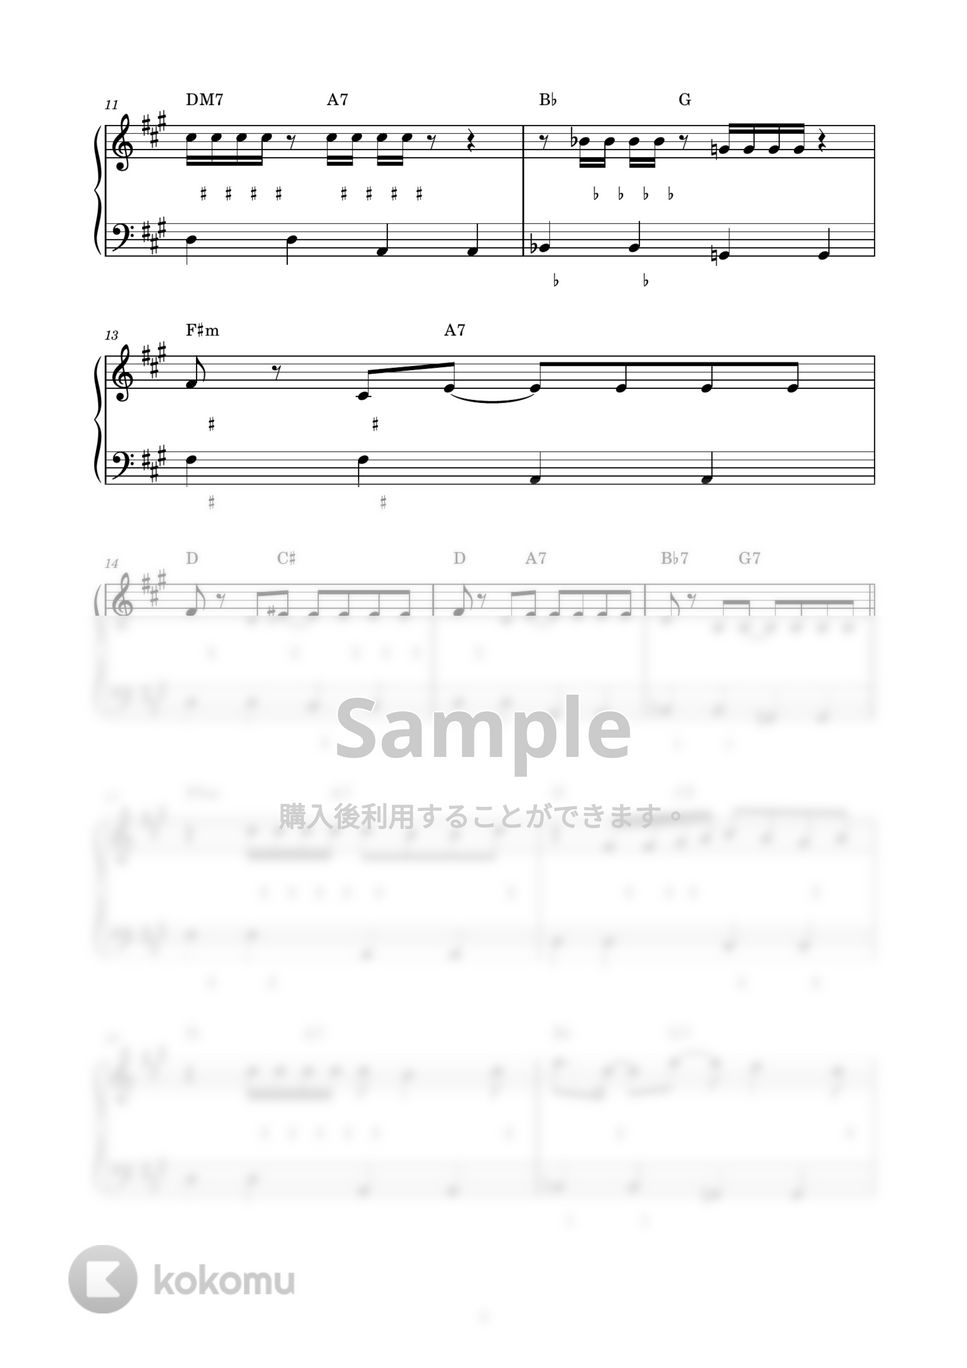 King Gnu - 一途 (ピアノ楽譜 / かんたん両手 / 歌詞付き / ドレミ付き / 初心者向き) by piano.tokyo